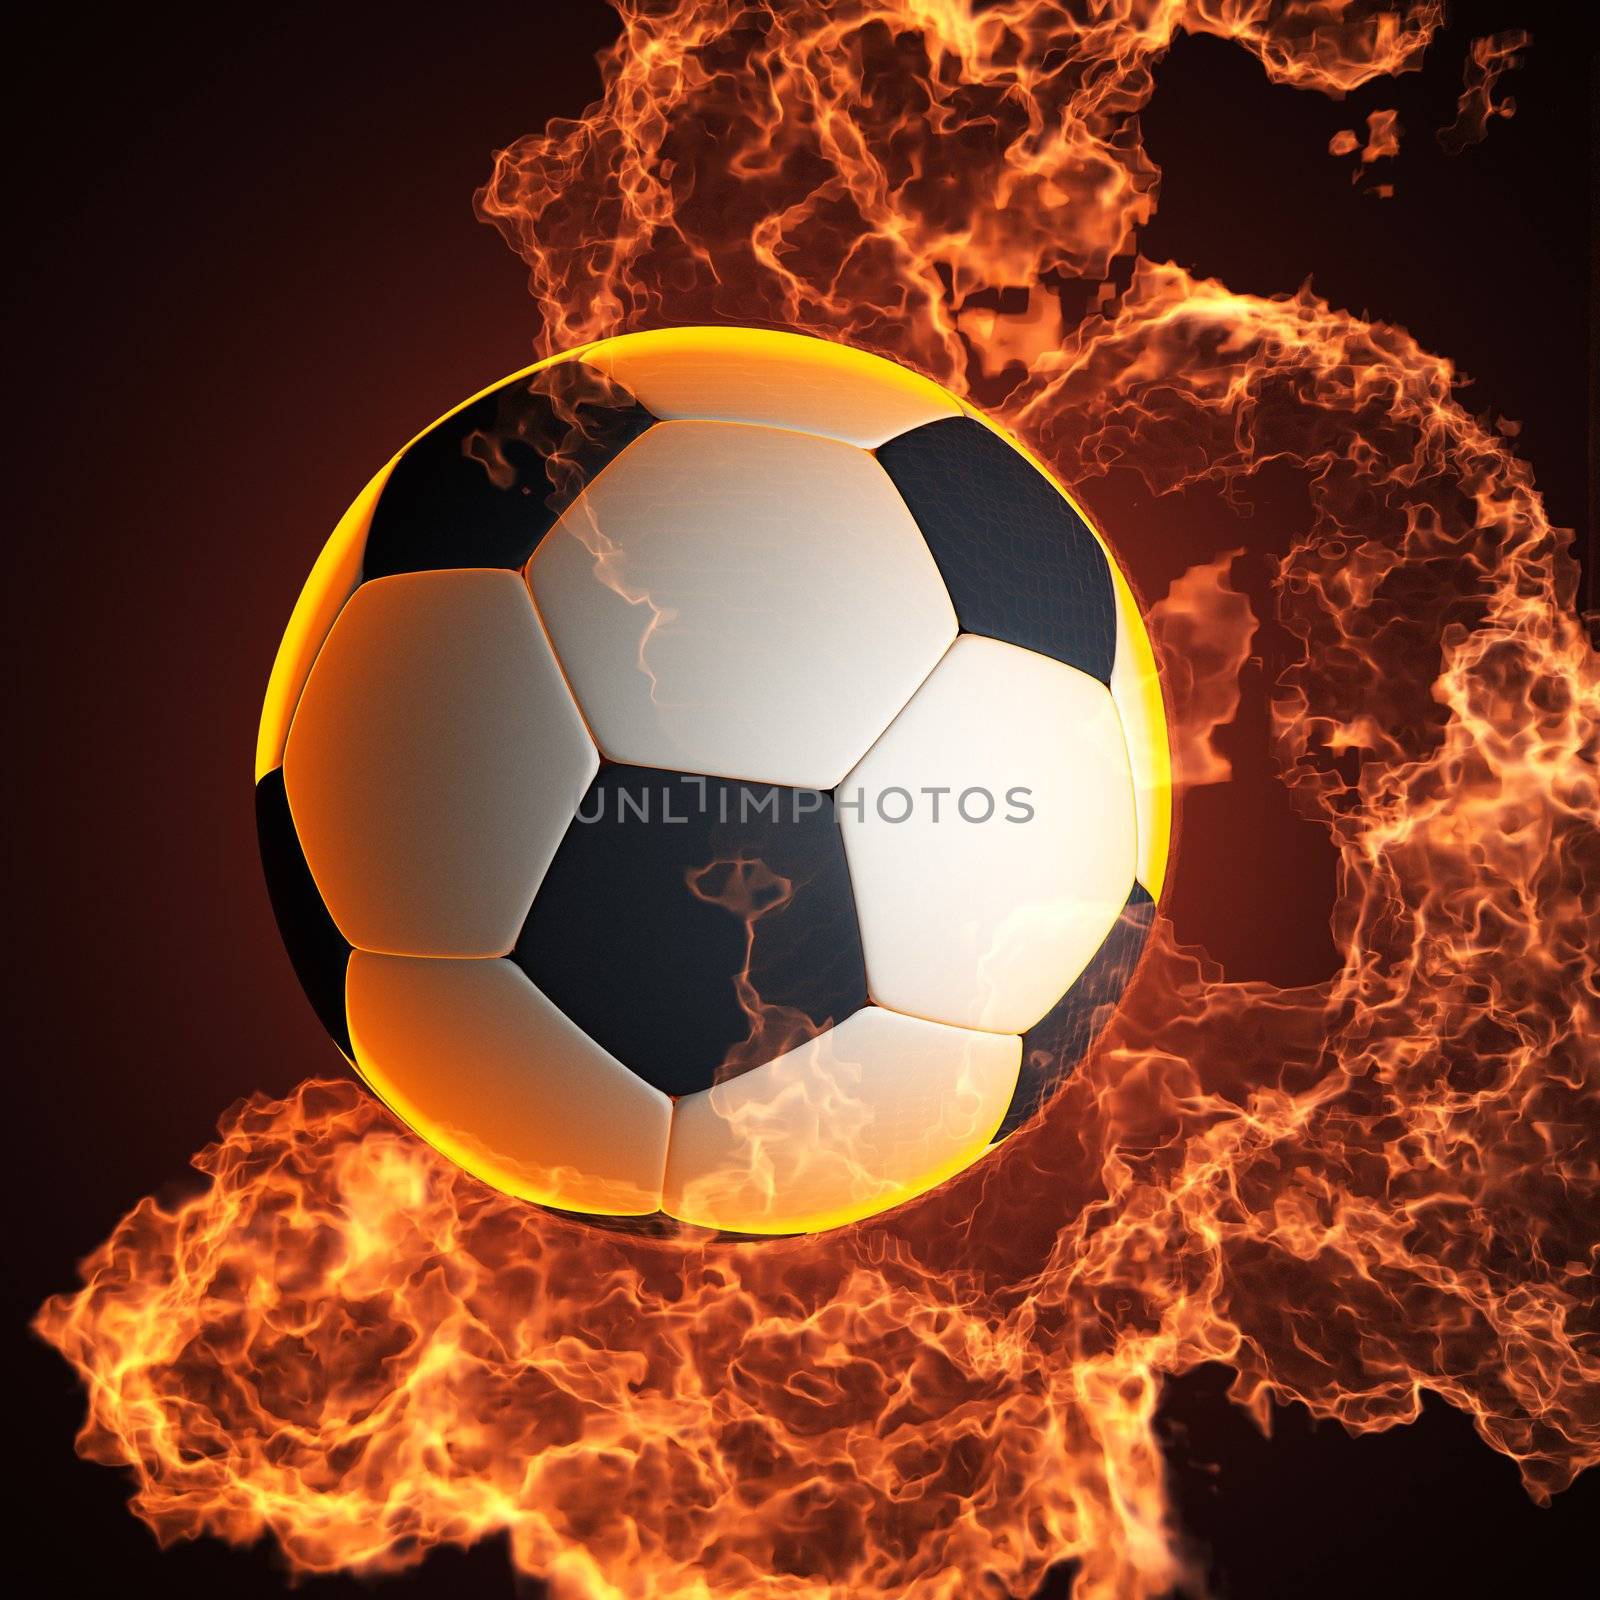 soccer ball in fire by videodoctor